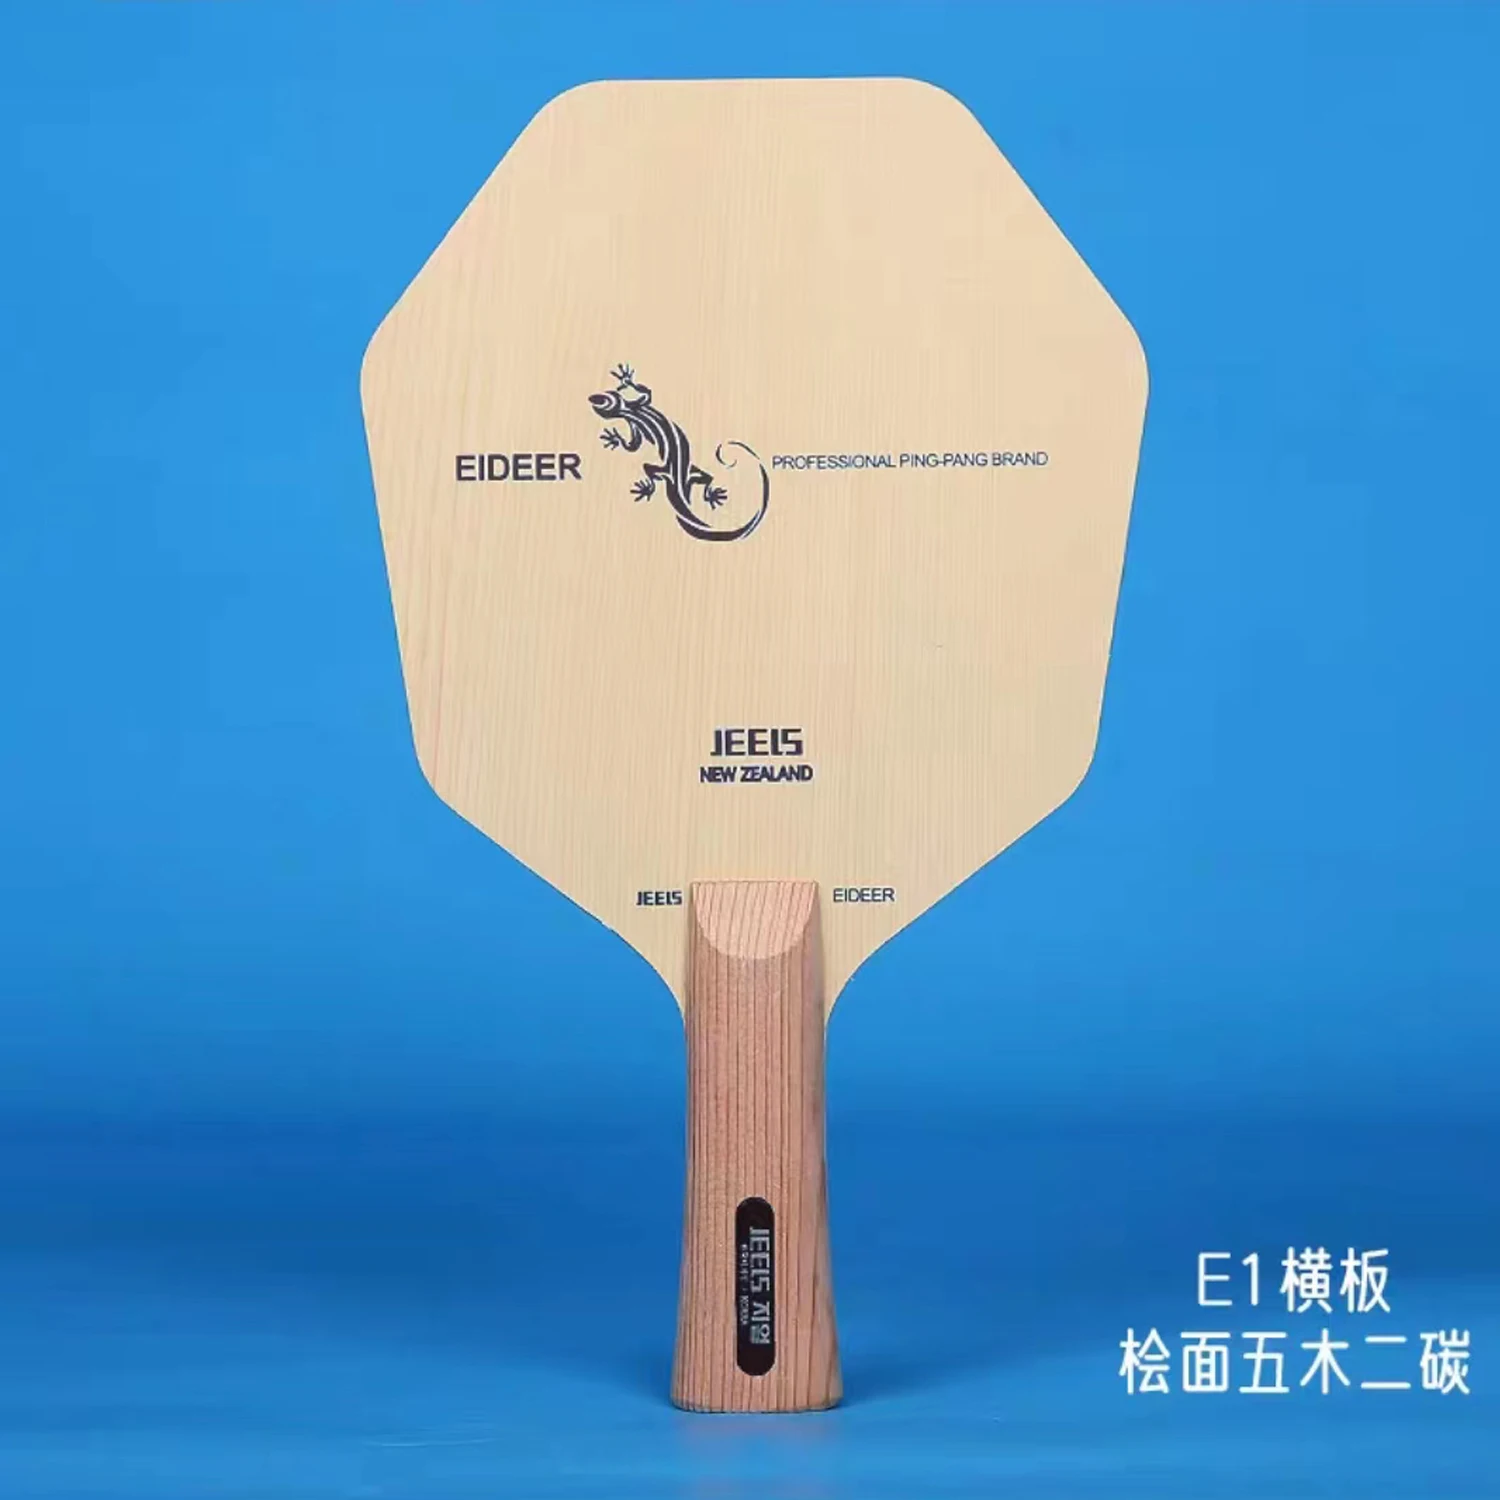 JEELS EIDEER EIDEER 1 Hexagon table tennis blade professional pure wood carbon attack pingpong racket